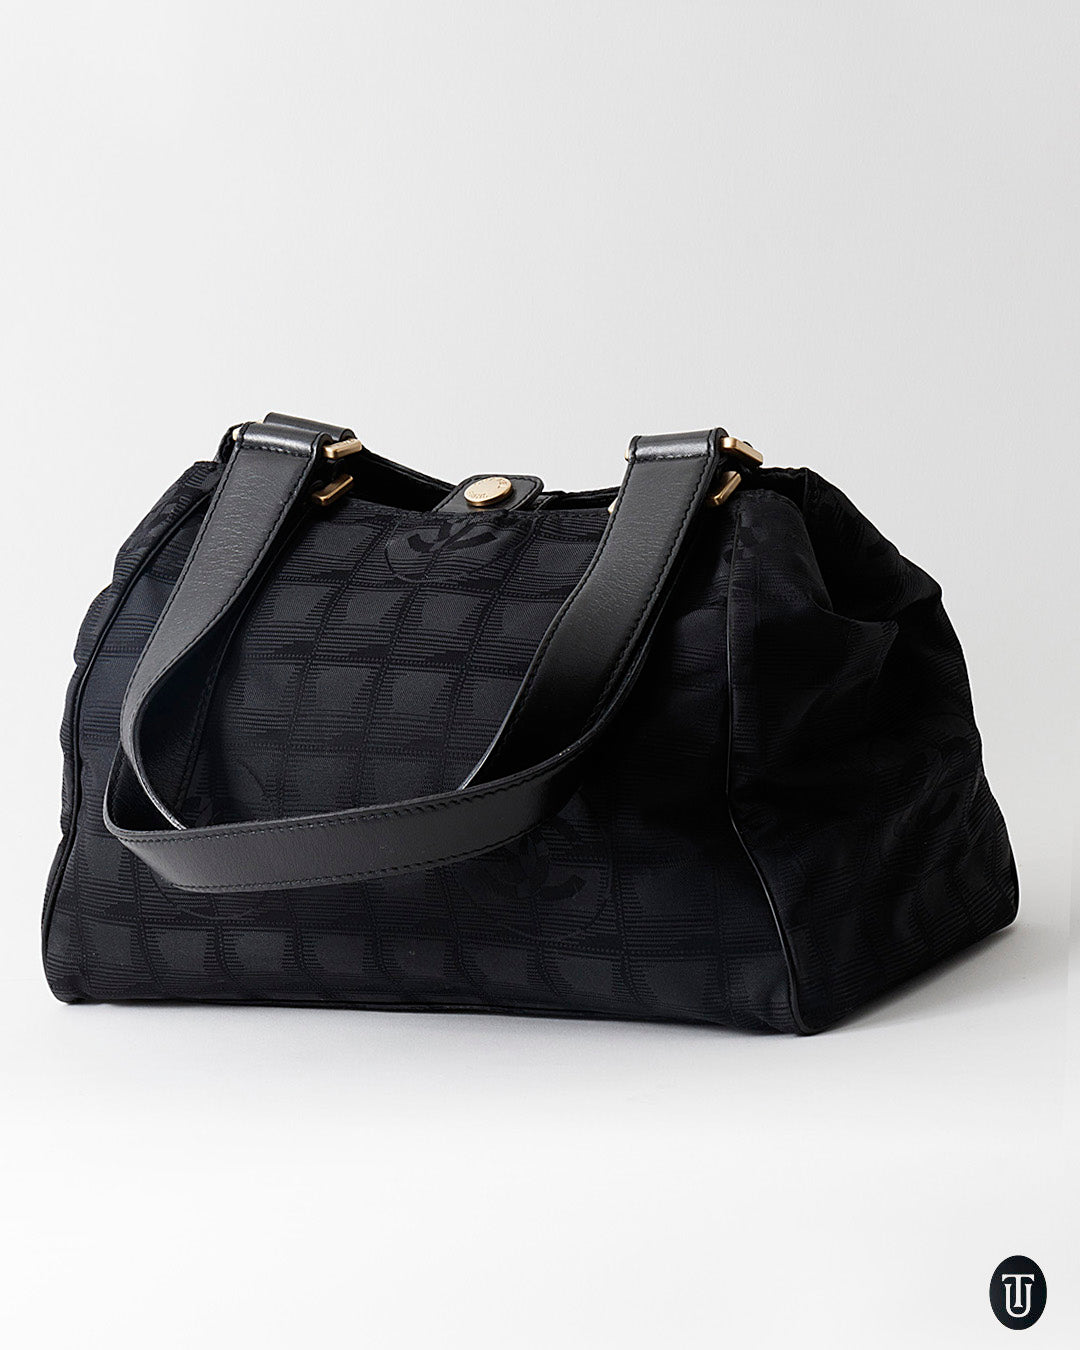 2000s Chanel nylon handbag